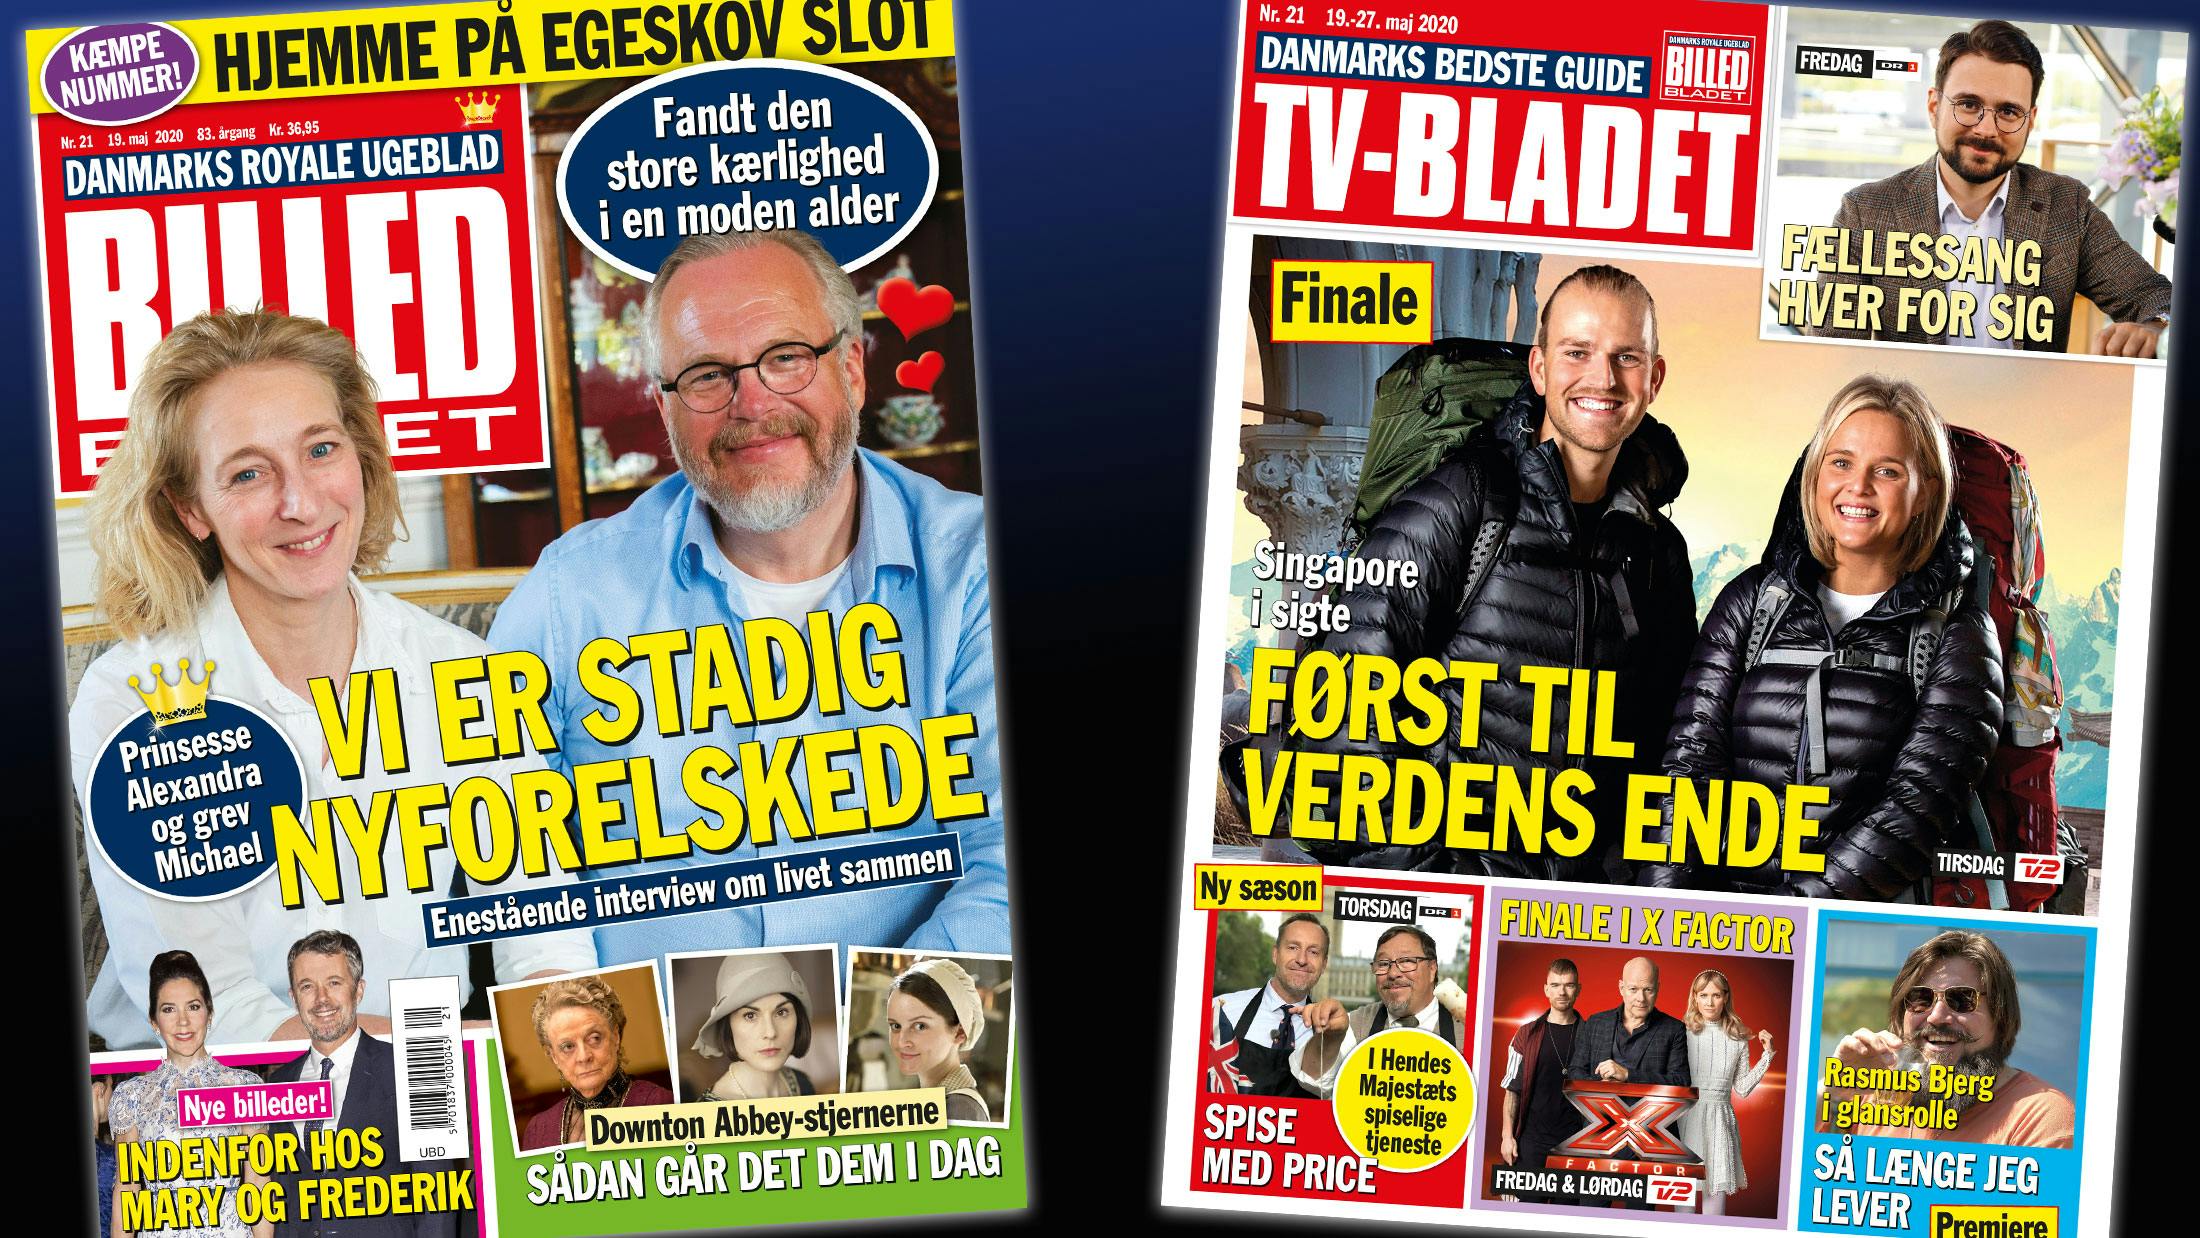 https://imgix.billedbladet.dk/media/article/webgrafik_bb21-forsider-recovered.jpg